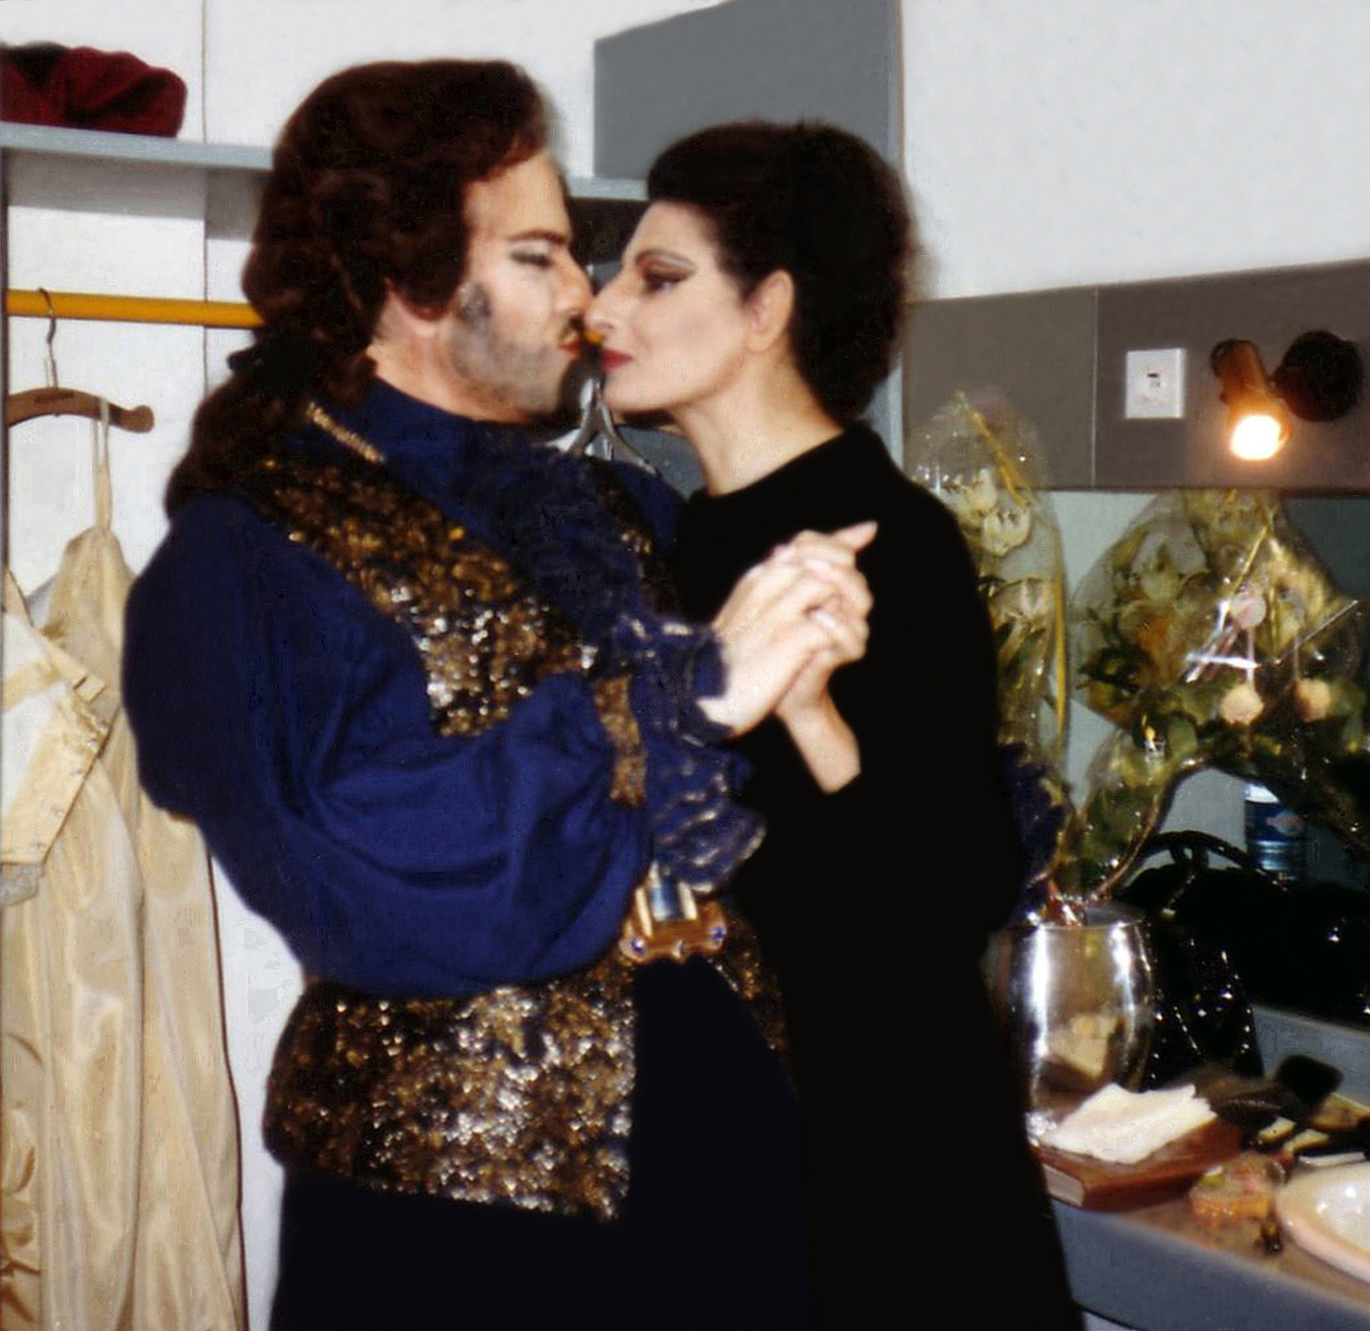 Lucia Aliberti with the American tenor Rockwell Blake⚘Saint-Etienne Opera House⚘Saint-Etienne⚘Opera⚘"Il Pirata"⚘Dressing Room⚘Makeup Session⚘:http://www.luciaaliberti.it #luciaaliberti #rockwellblake #saintetienneoperahouse #saintetienne #ilpirata #opera #dressingroom #makeupsession